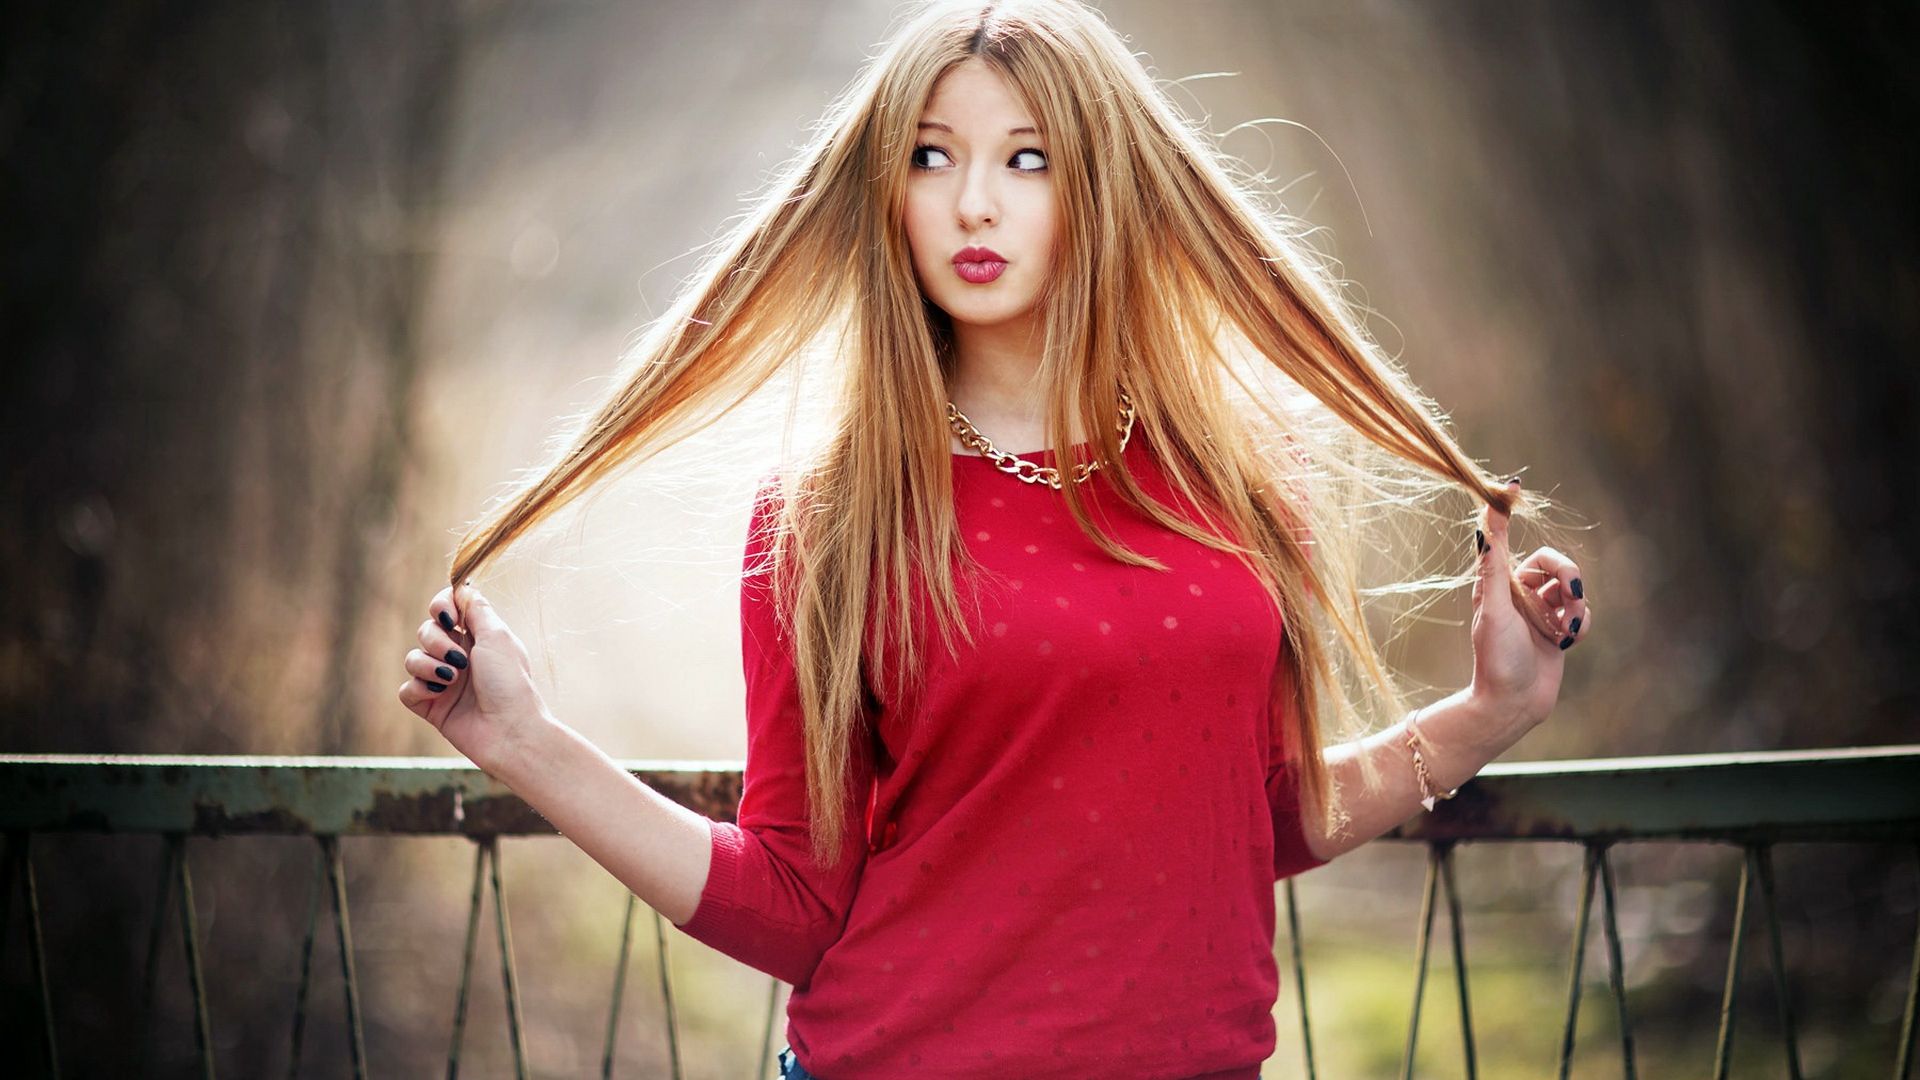 Wallpaper Fun, play with hair, outdoor, girl model